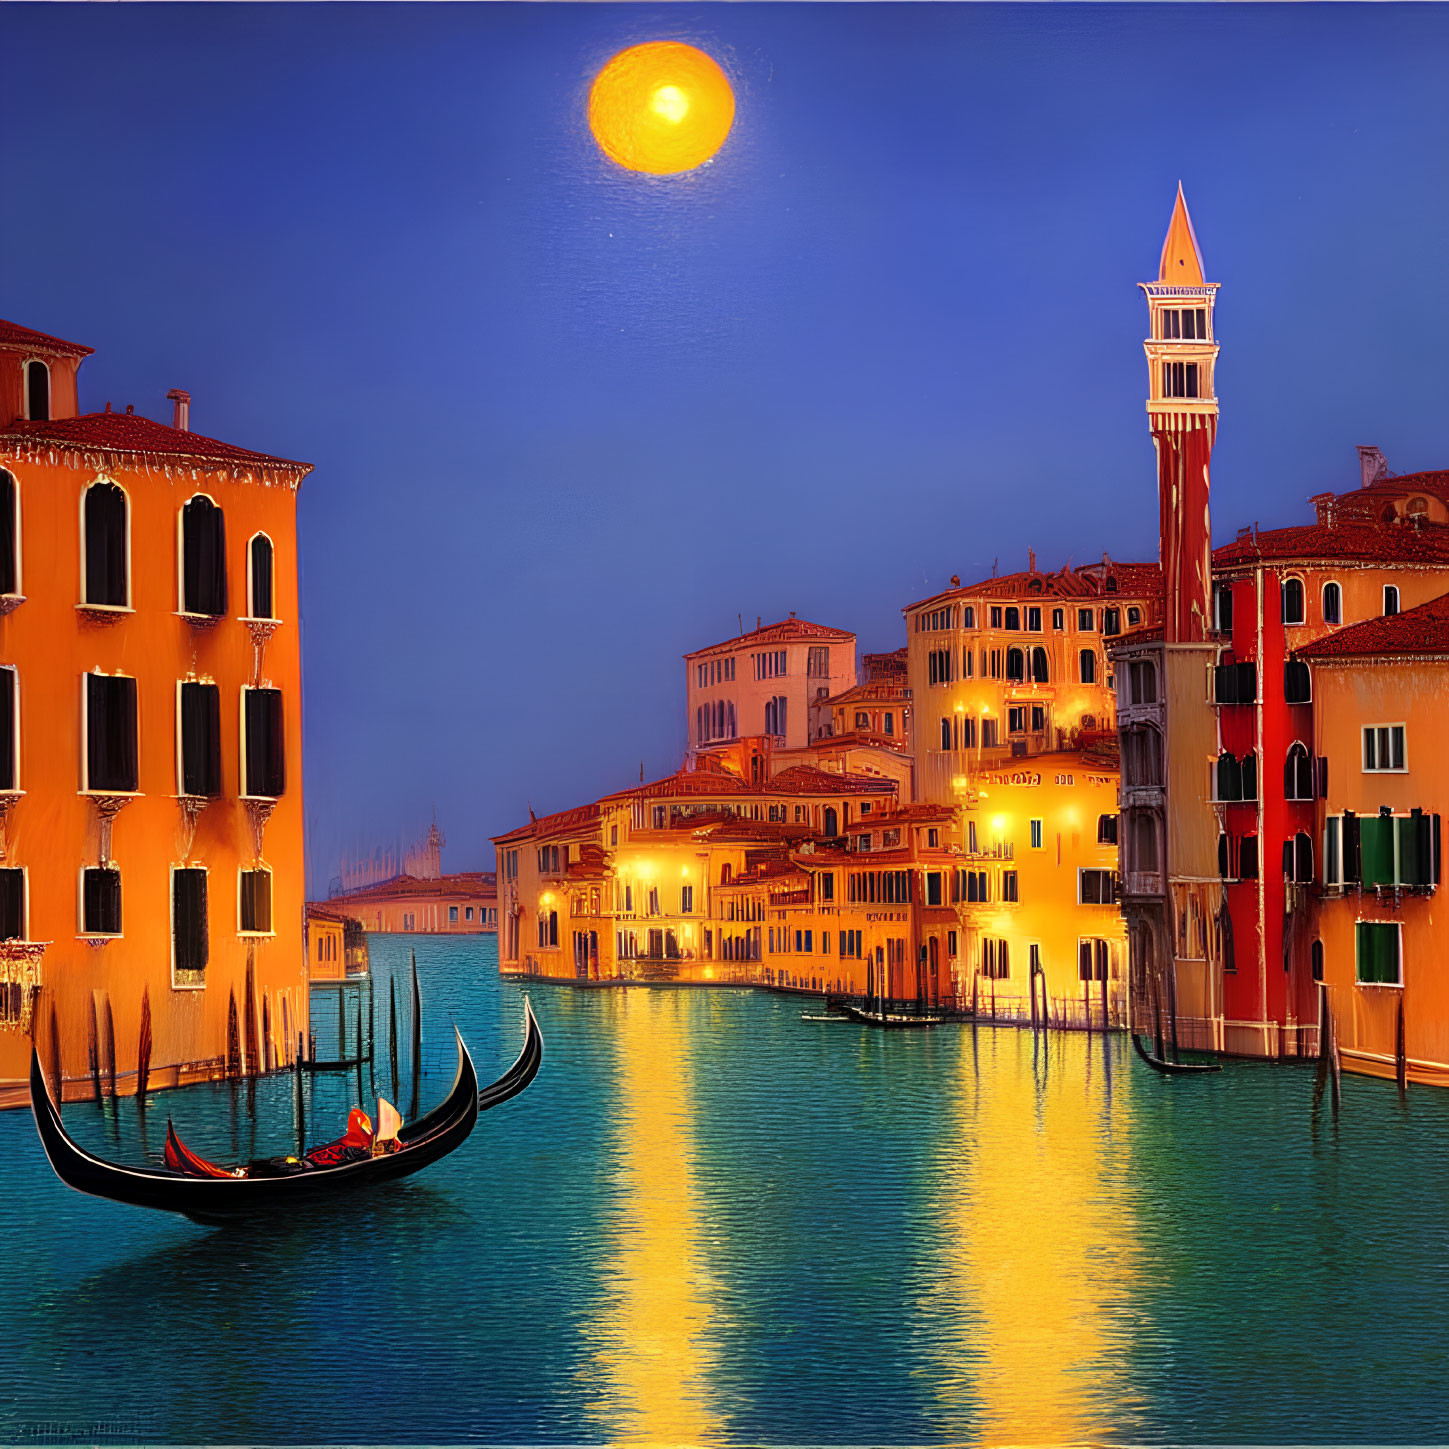 Venice Twilight Scene with Gondola on Canal